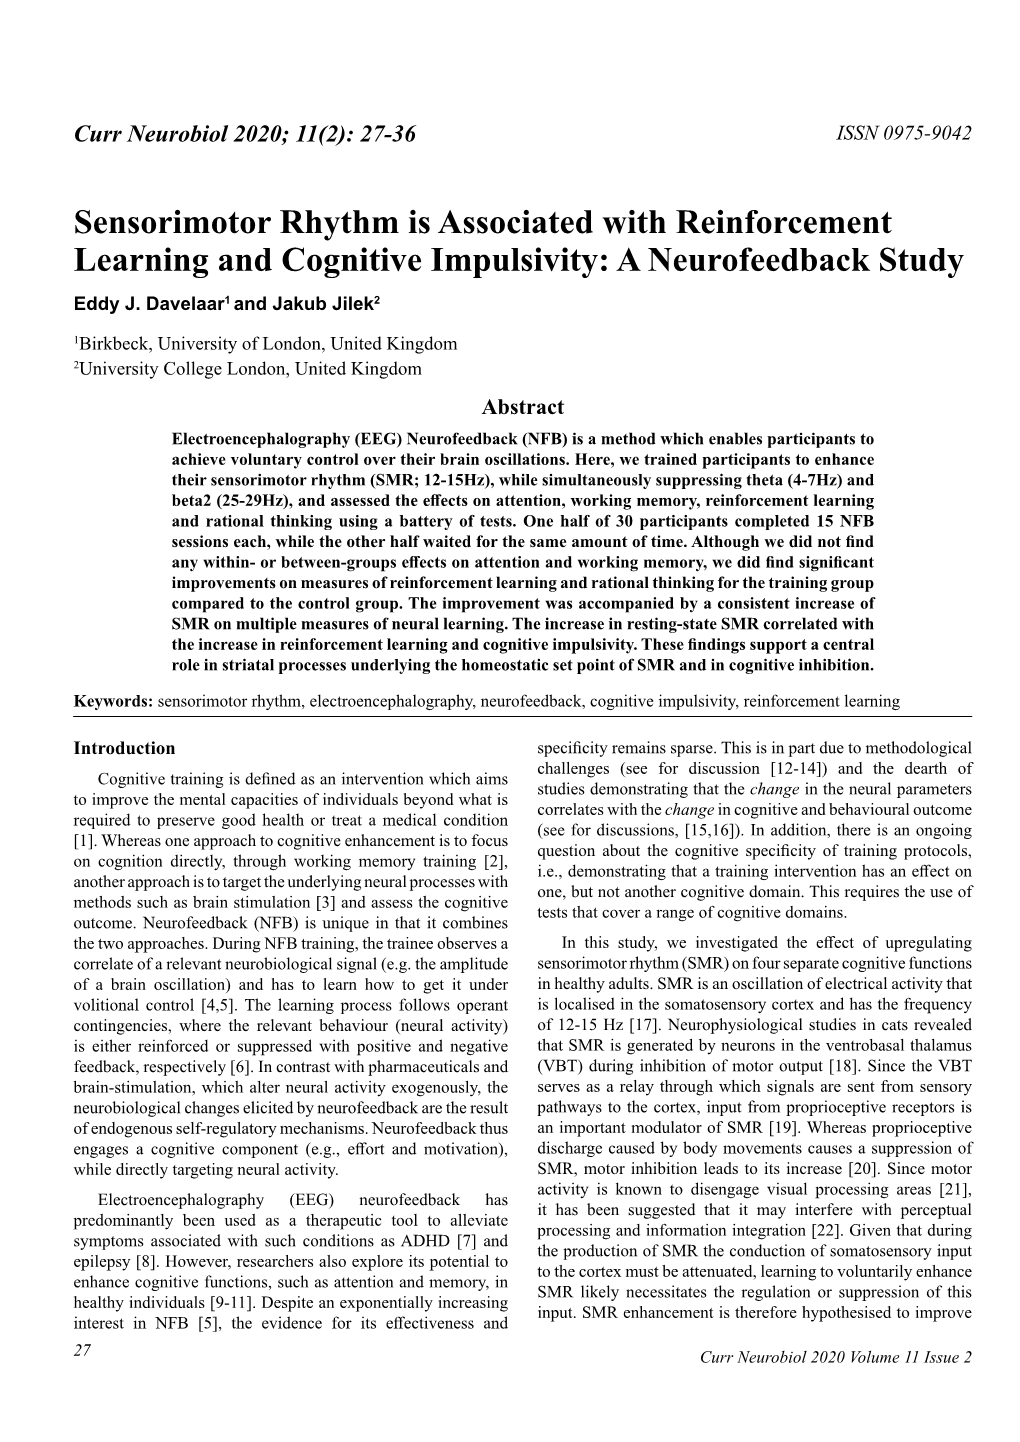 Sensorimotor Rhythm Is Associated with Reinforcement Learning and Cognitive Impulsivity: a Neurofeedback Study Eddy J